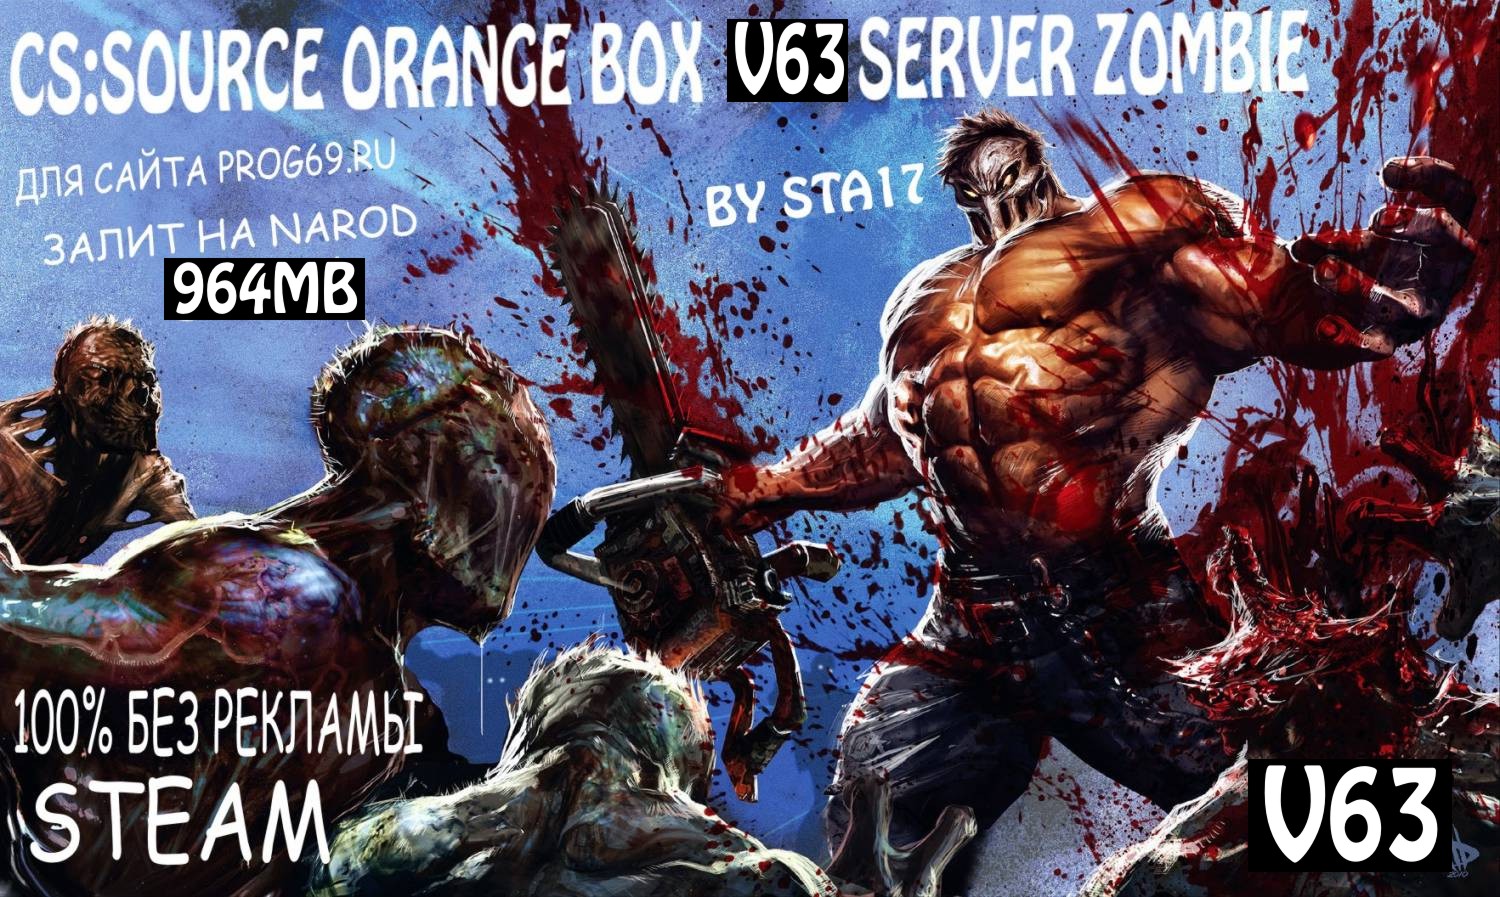 Скачать сs:source orange box V63 SERCER STEAM ZOMBIE by sta17 28.06.2011 бесплатно